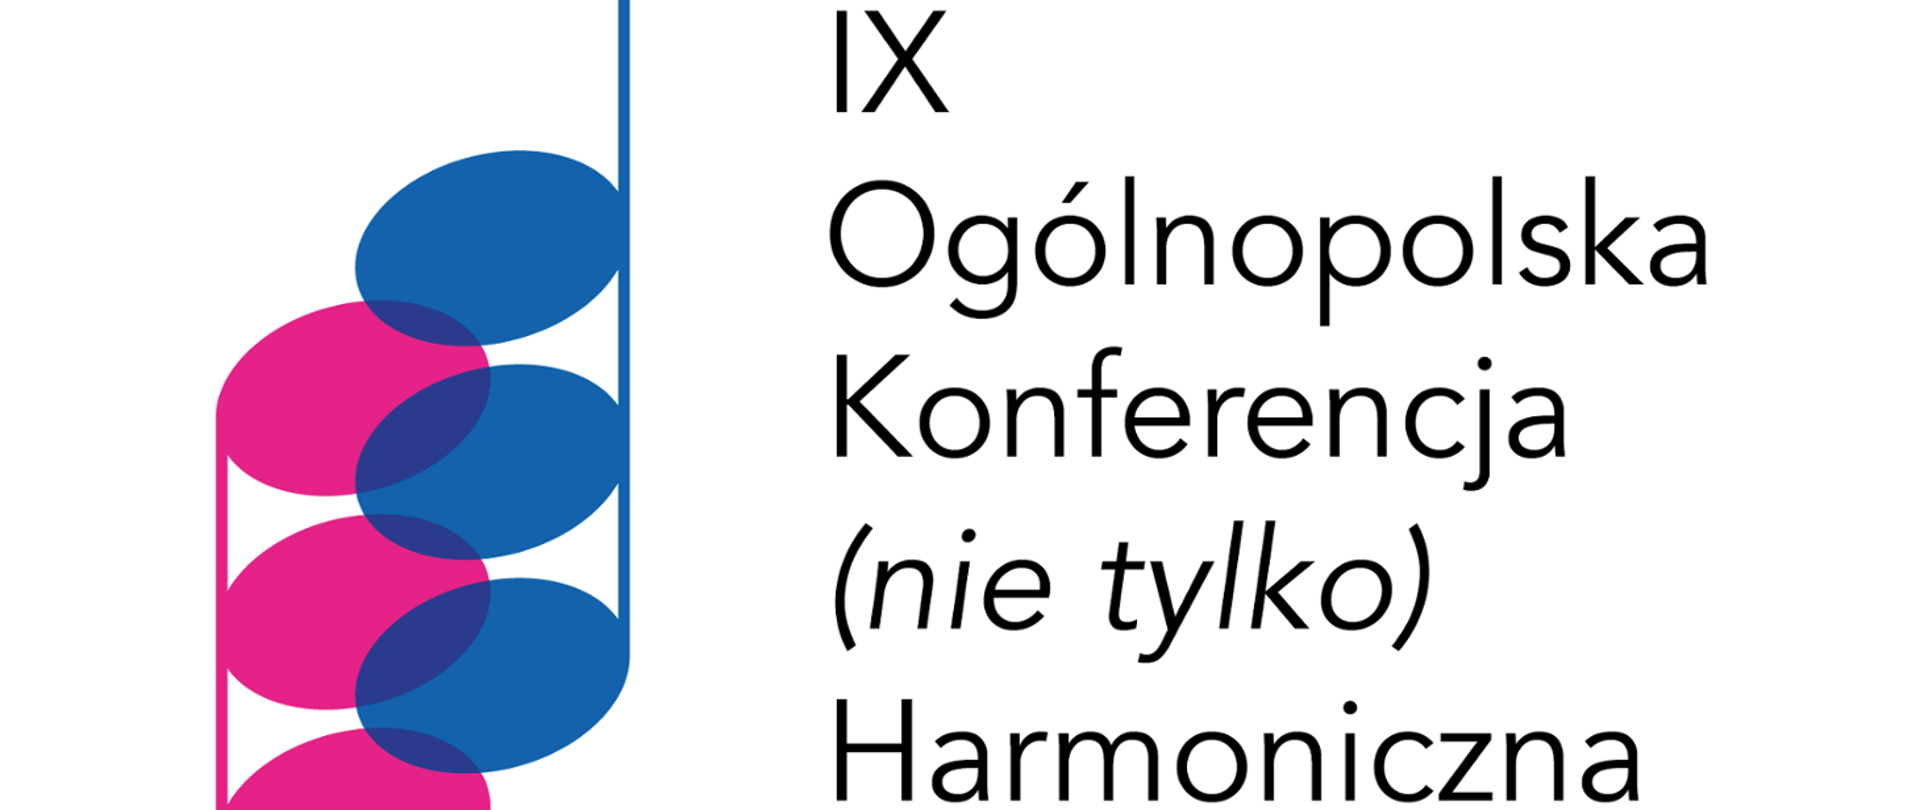 IX Ogólnopolska Konferencja Harmoniczna